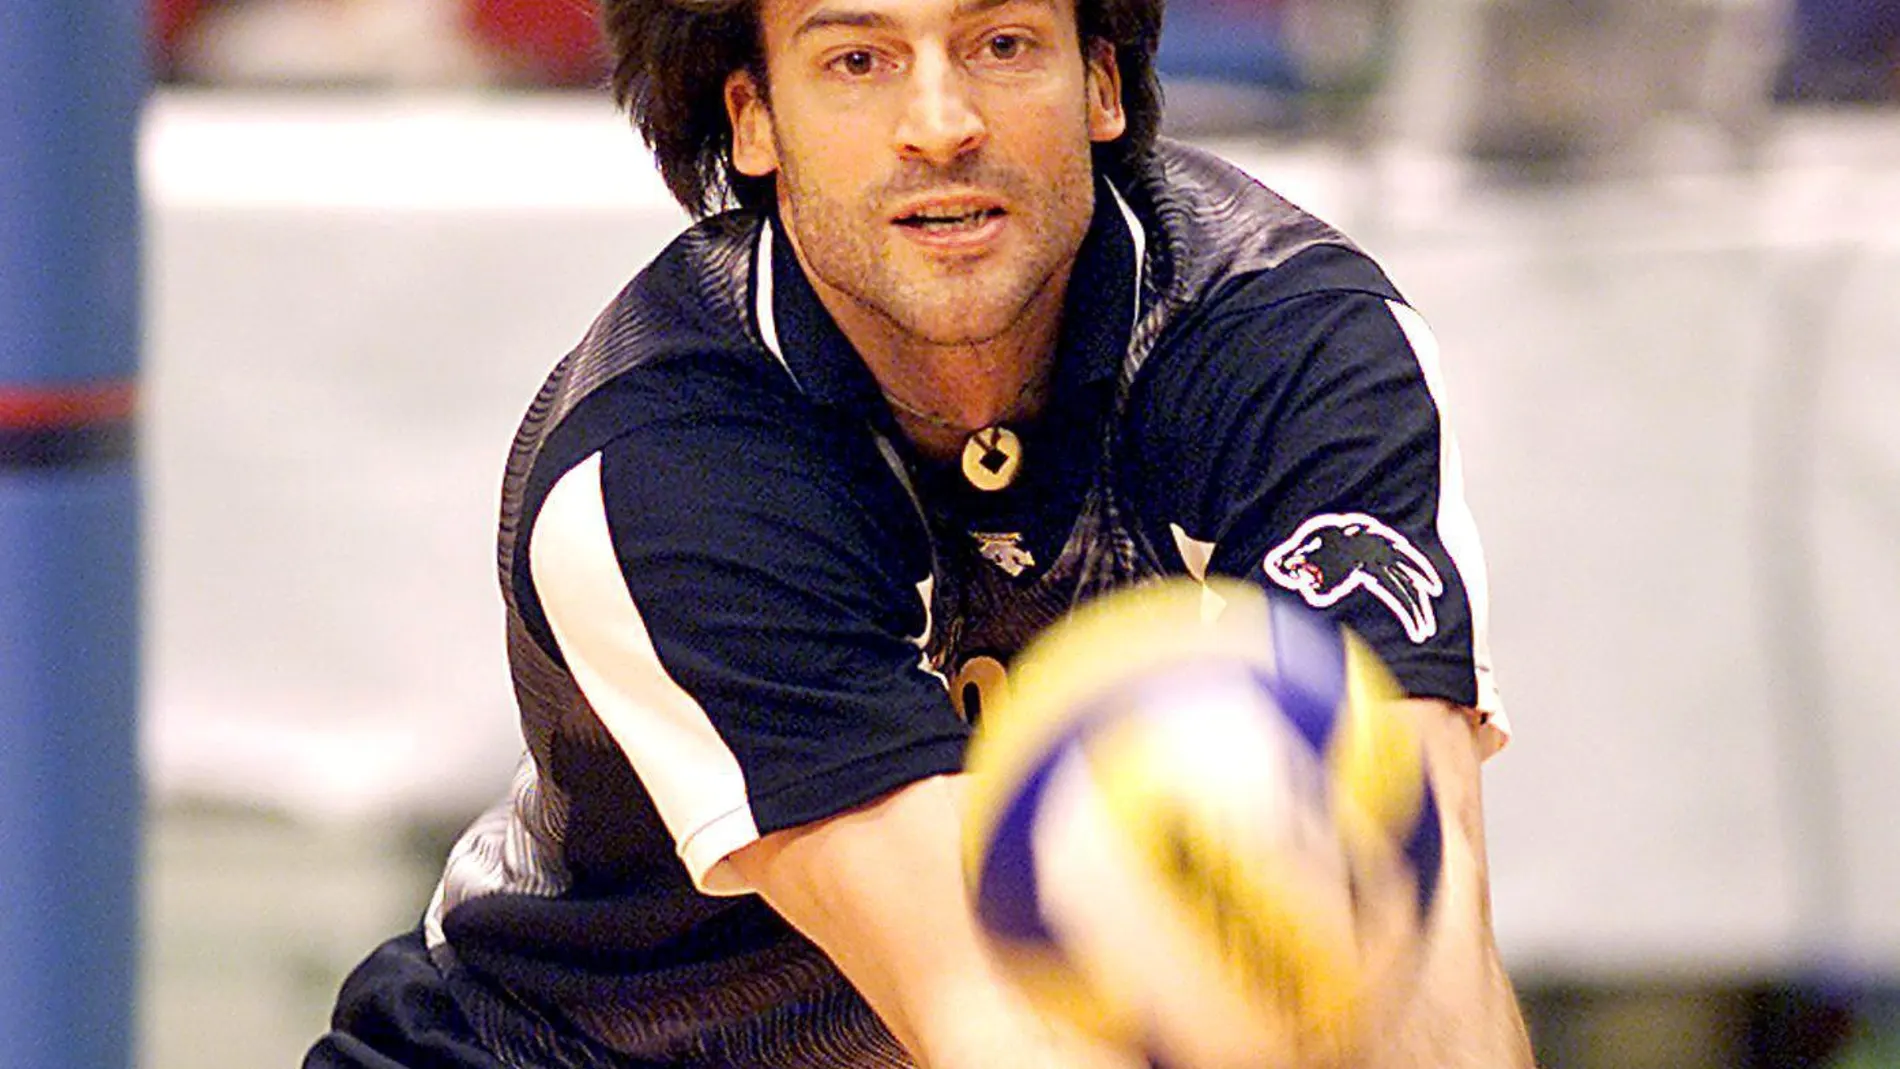 Rafael Pascual, leyenda del voleibol mundial